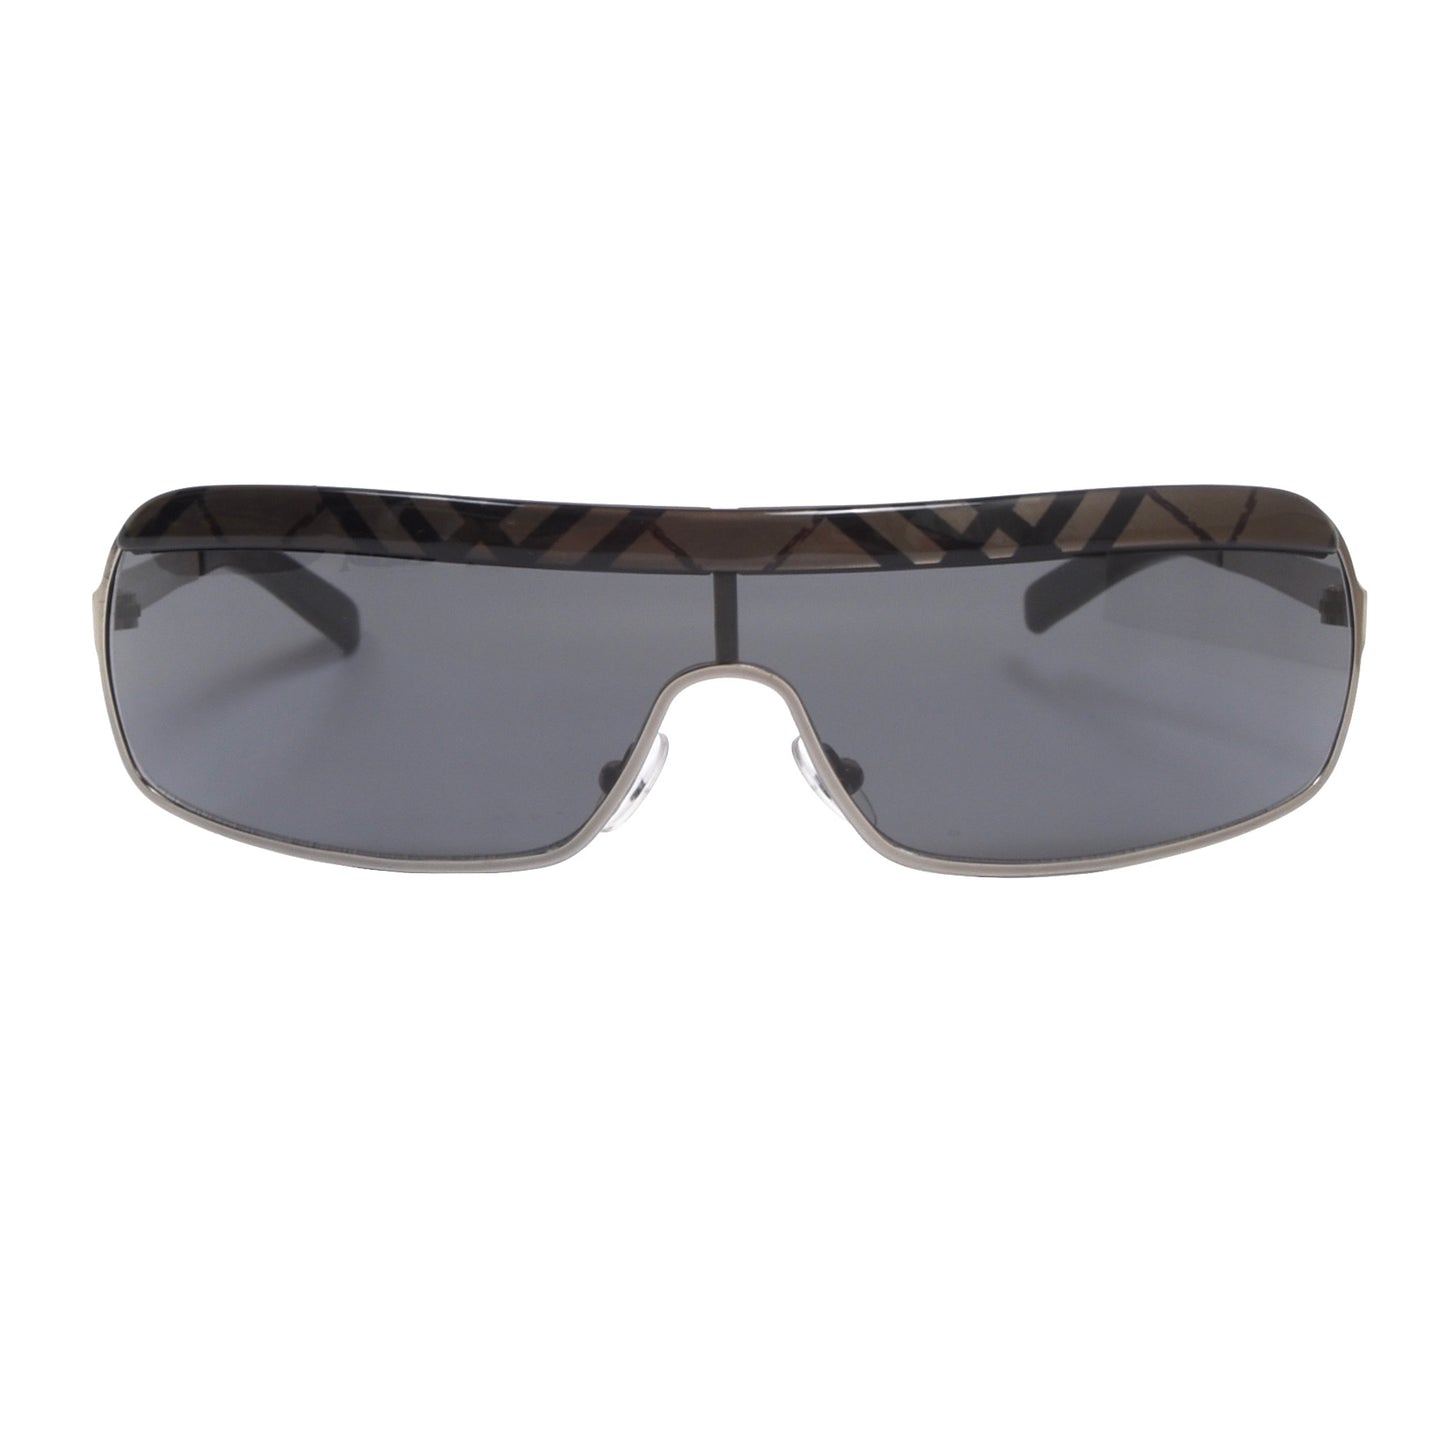 Burberry x Safilo Mod 8983 Sunglasses - Gold Novacheck